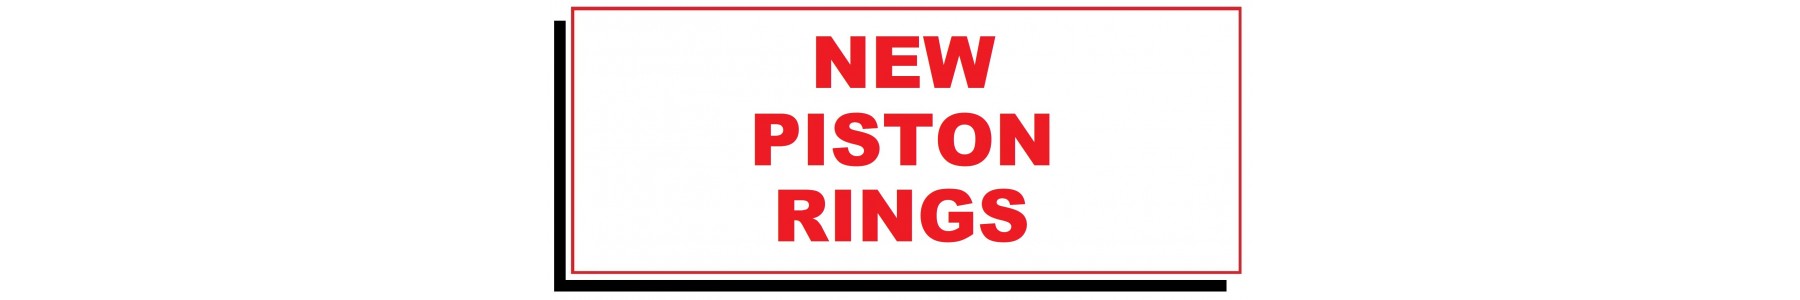 NEW PISTON RINGS